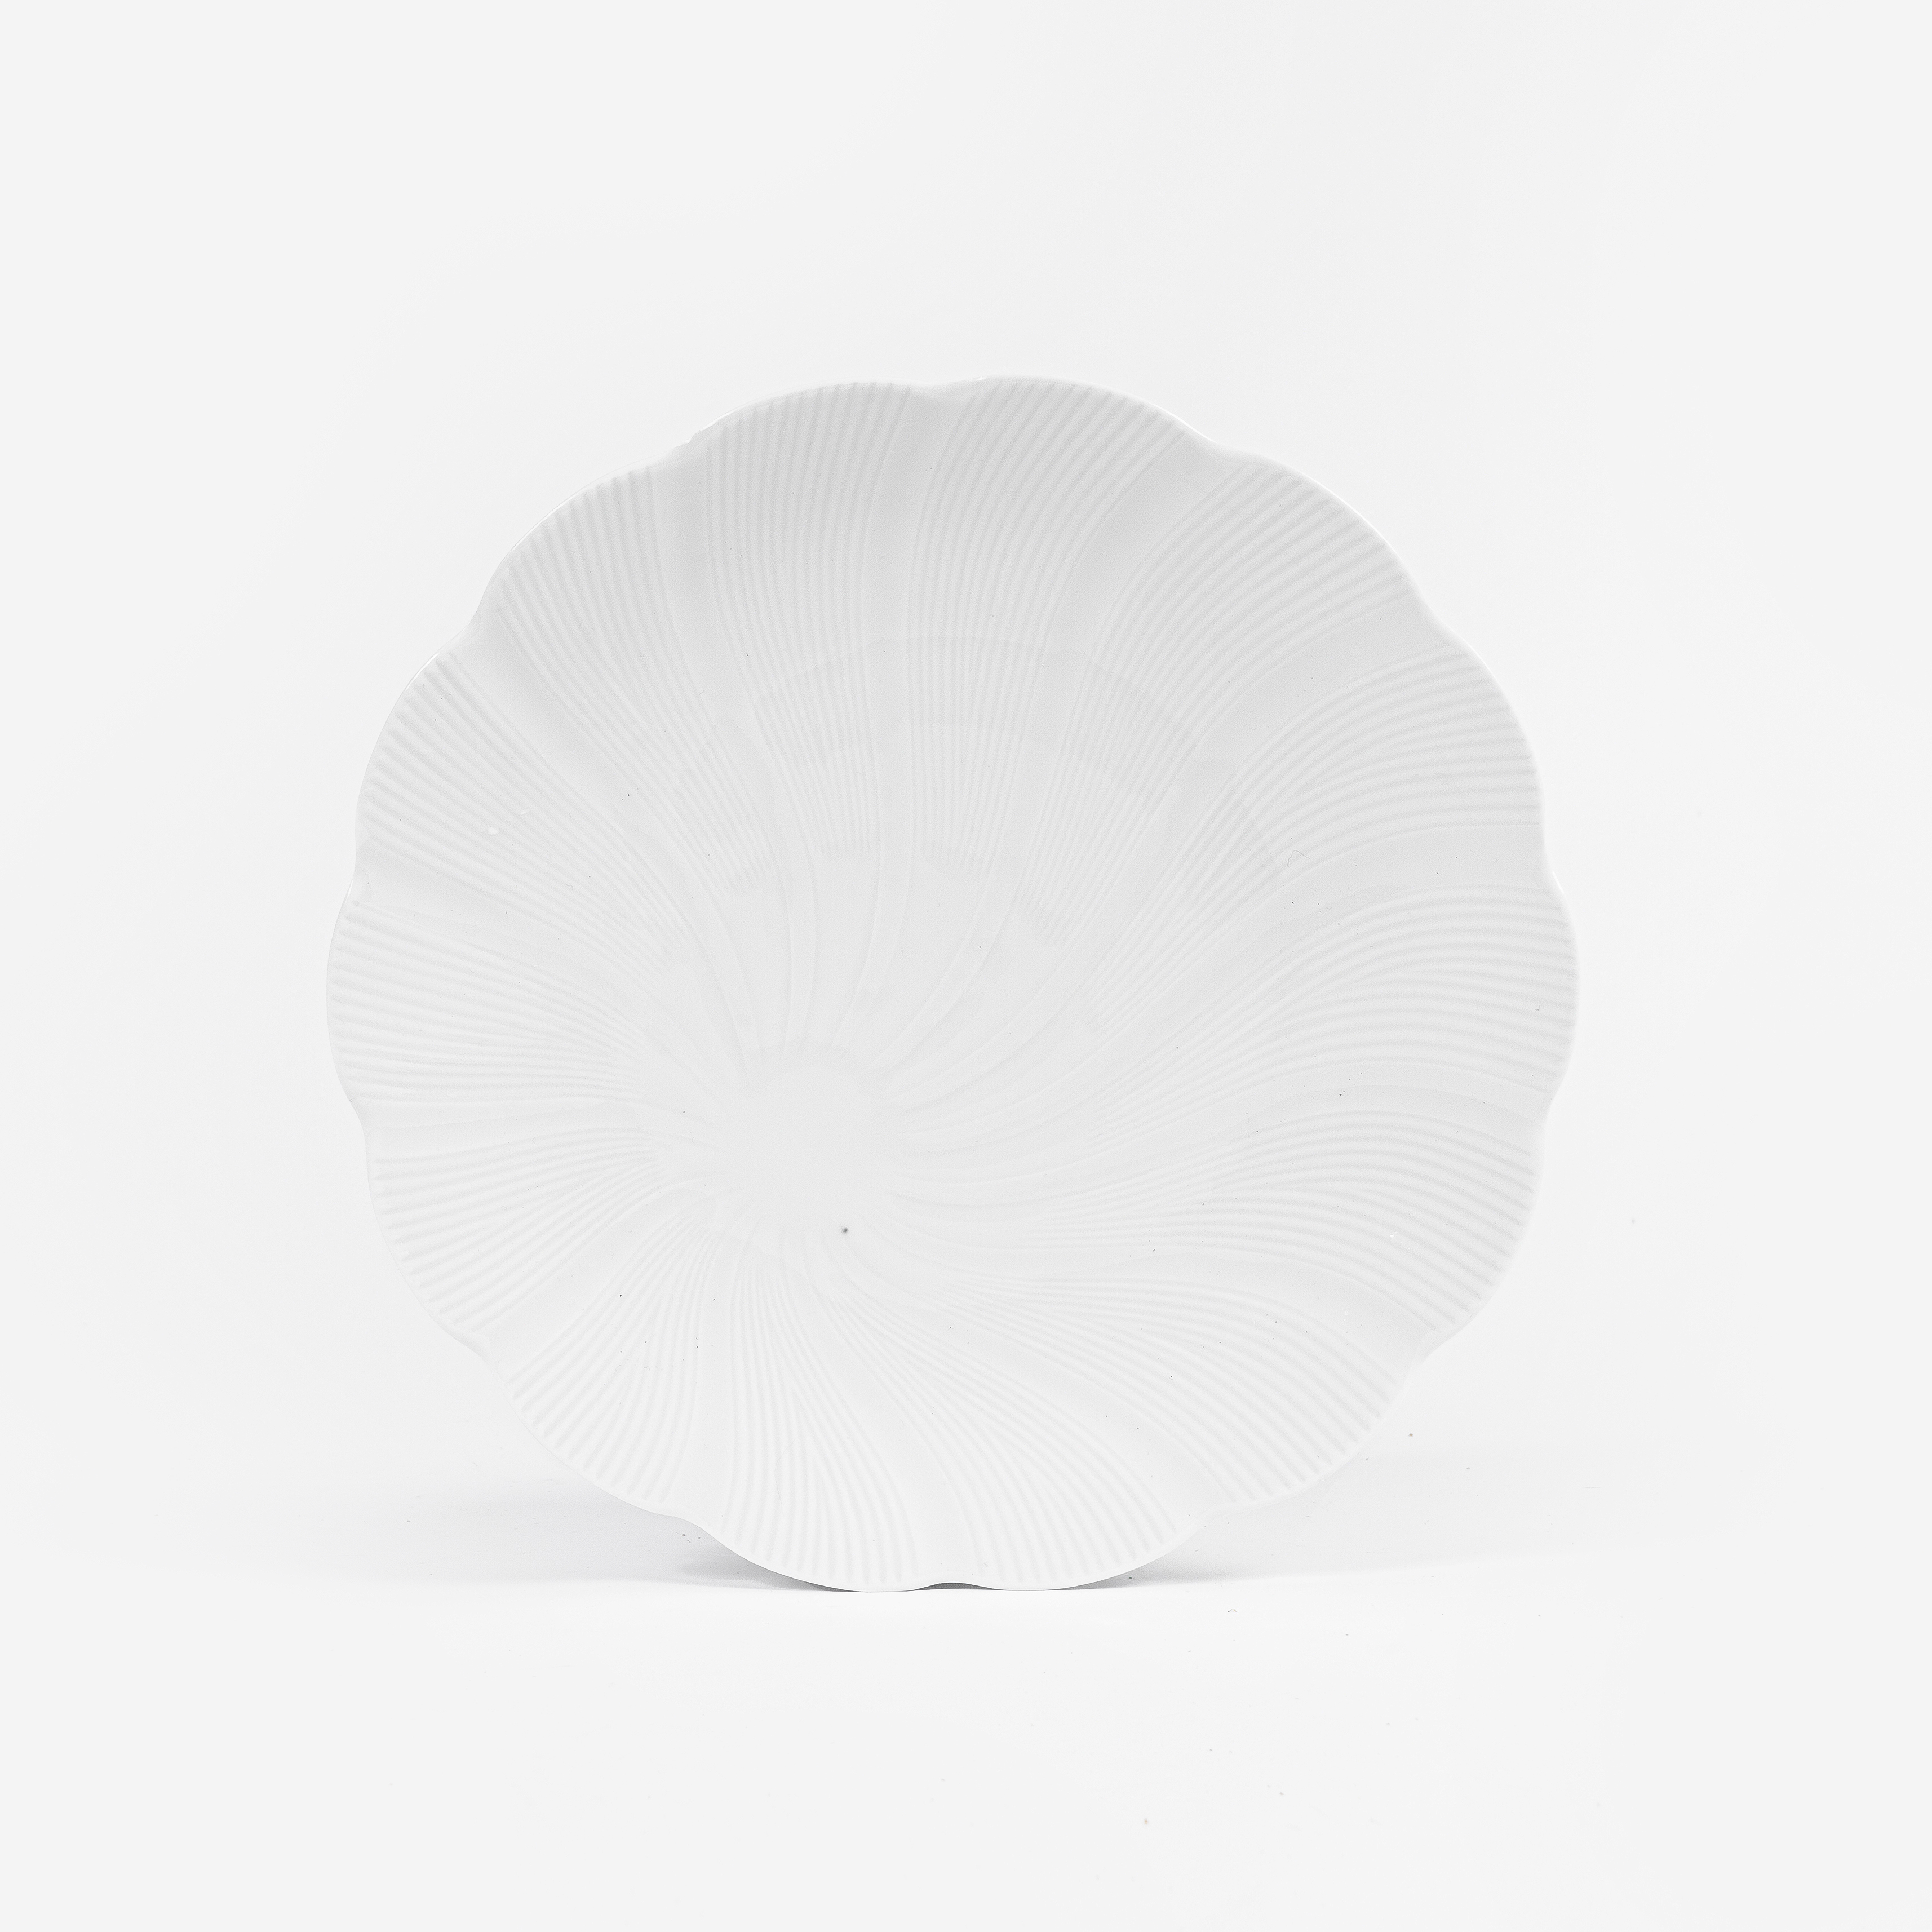 L'assiette plate blanche - Collection Tahiti